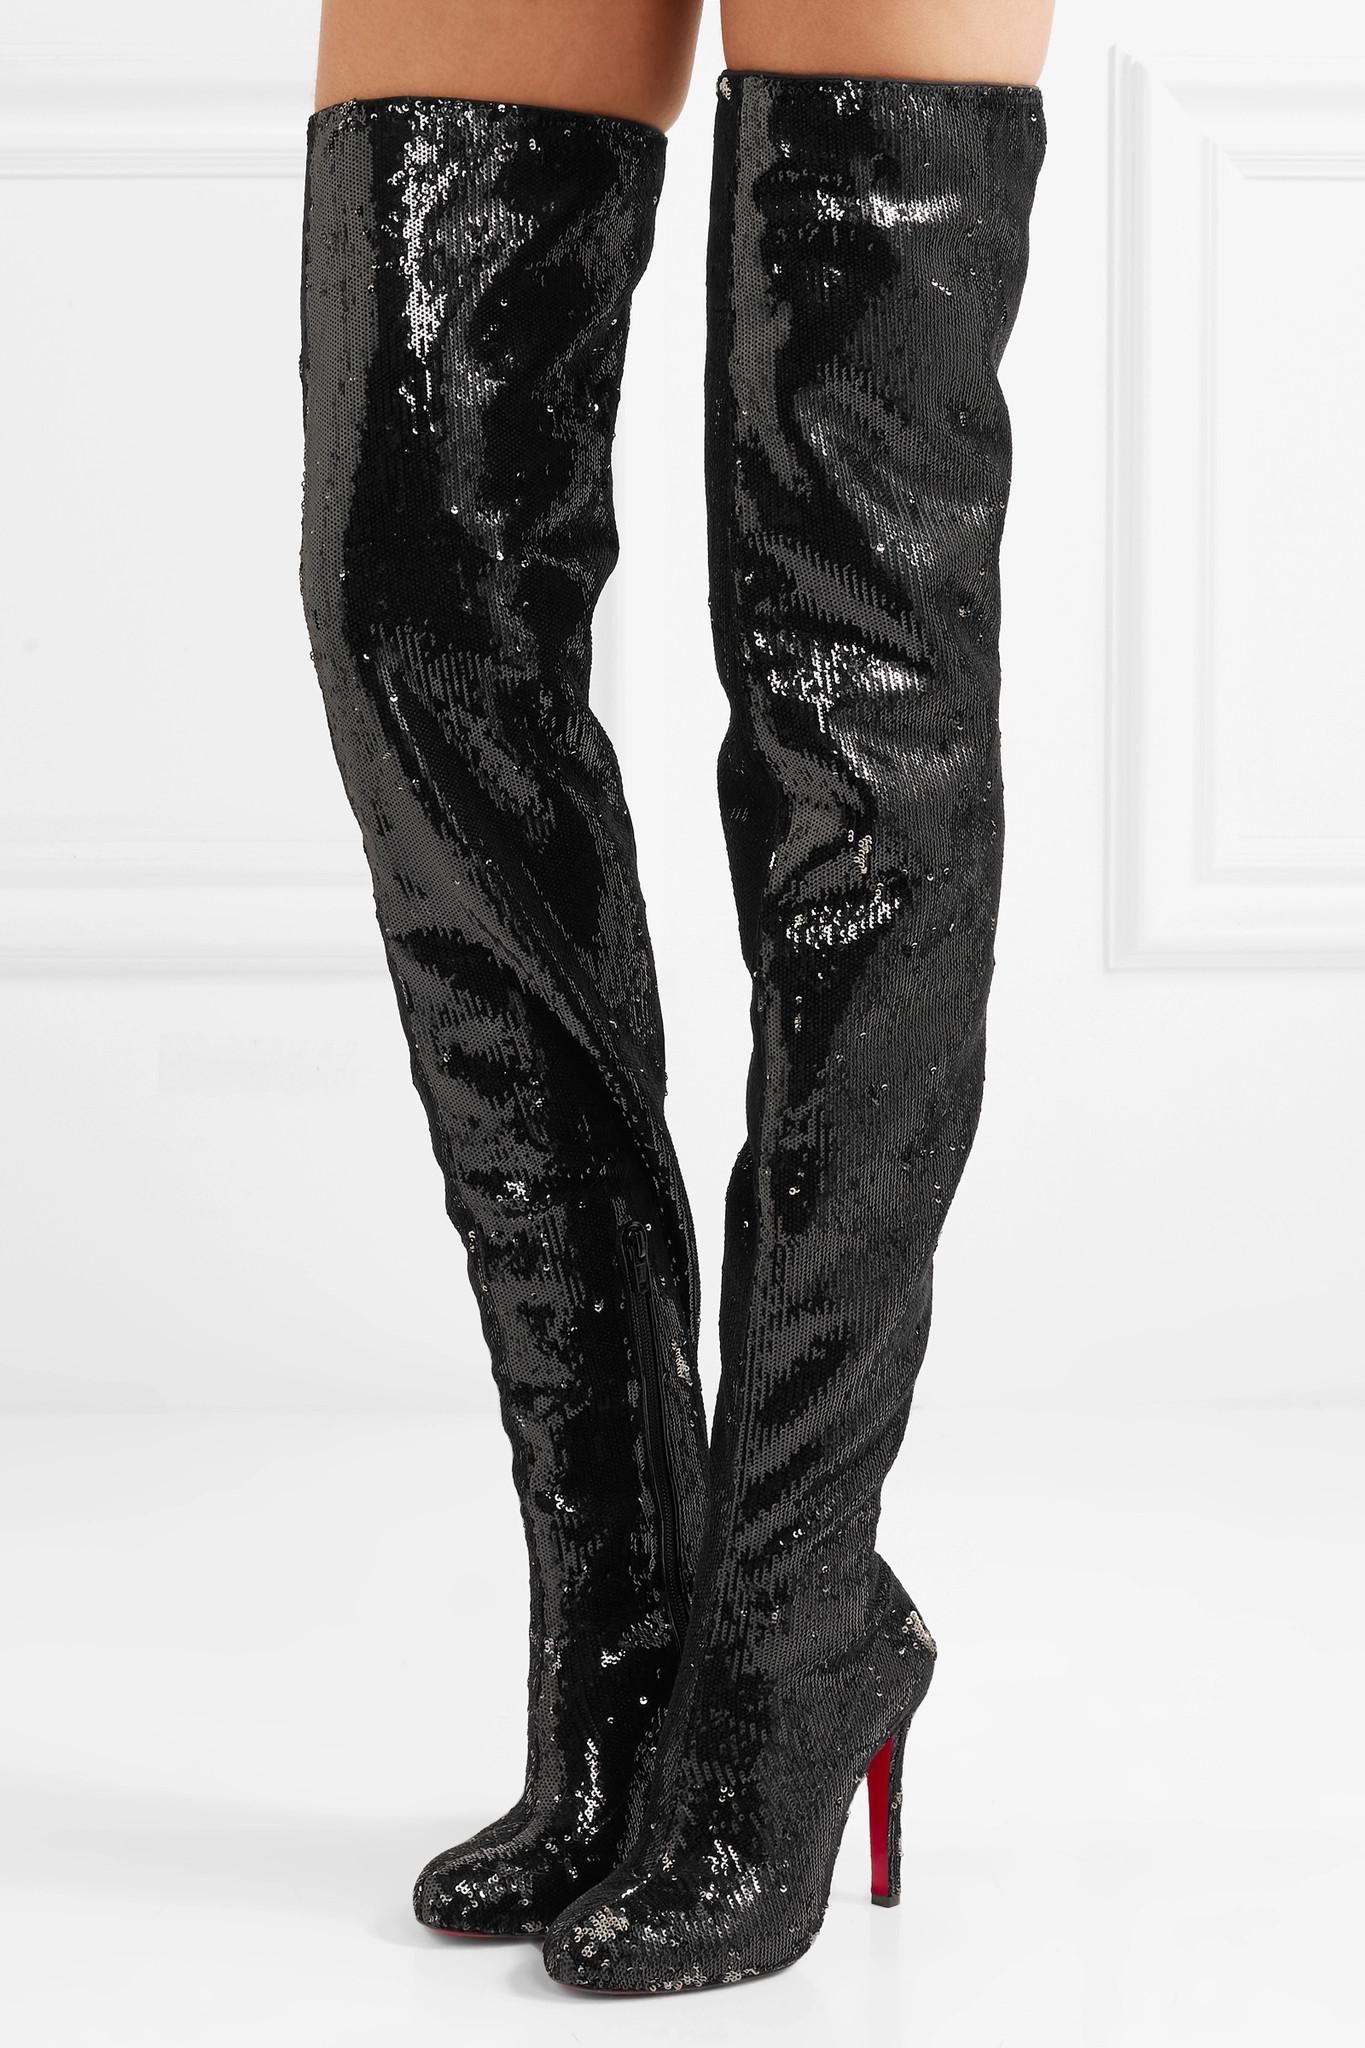 Black Sequin Over The Knee Boots | vlr.eng.br